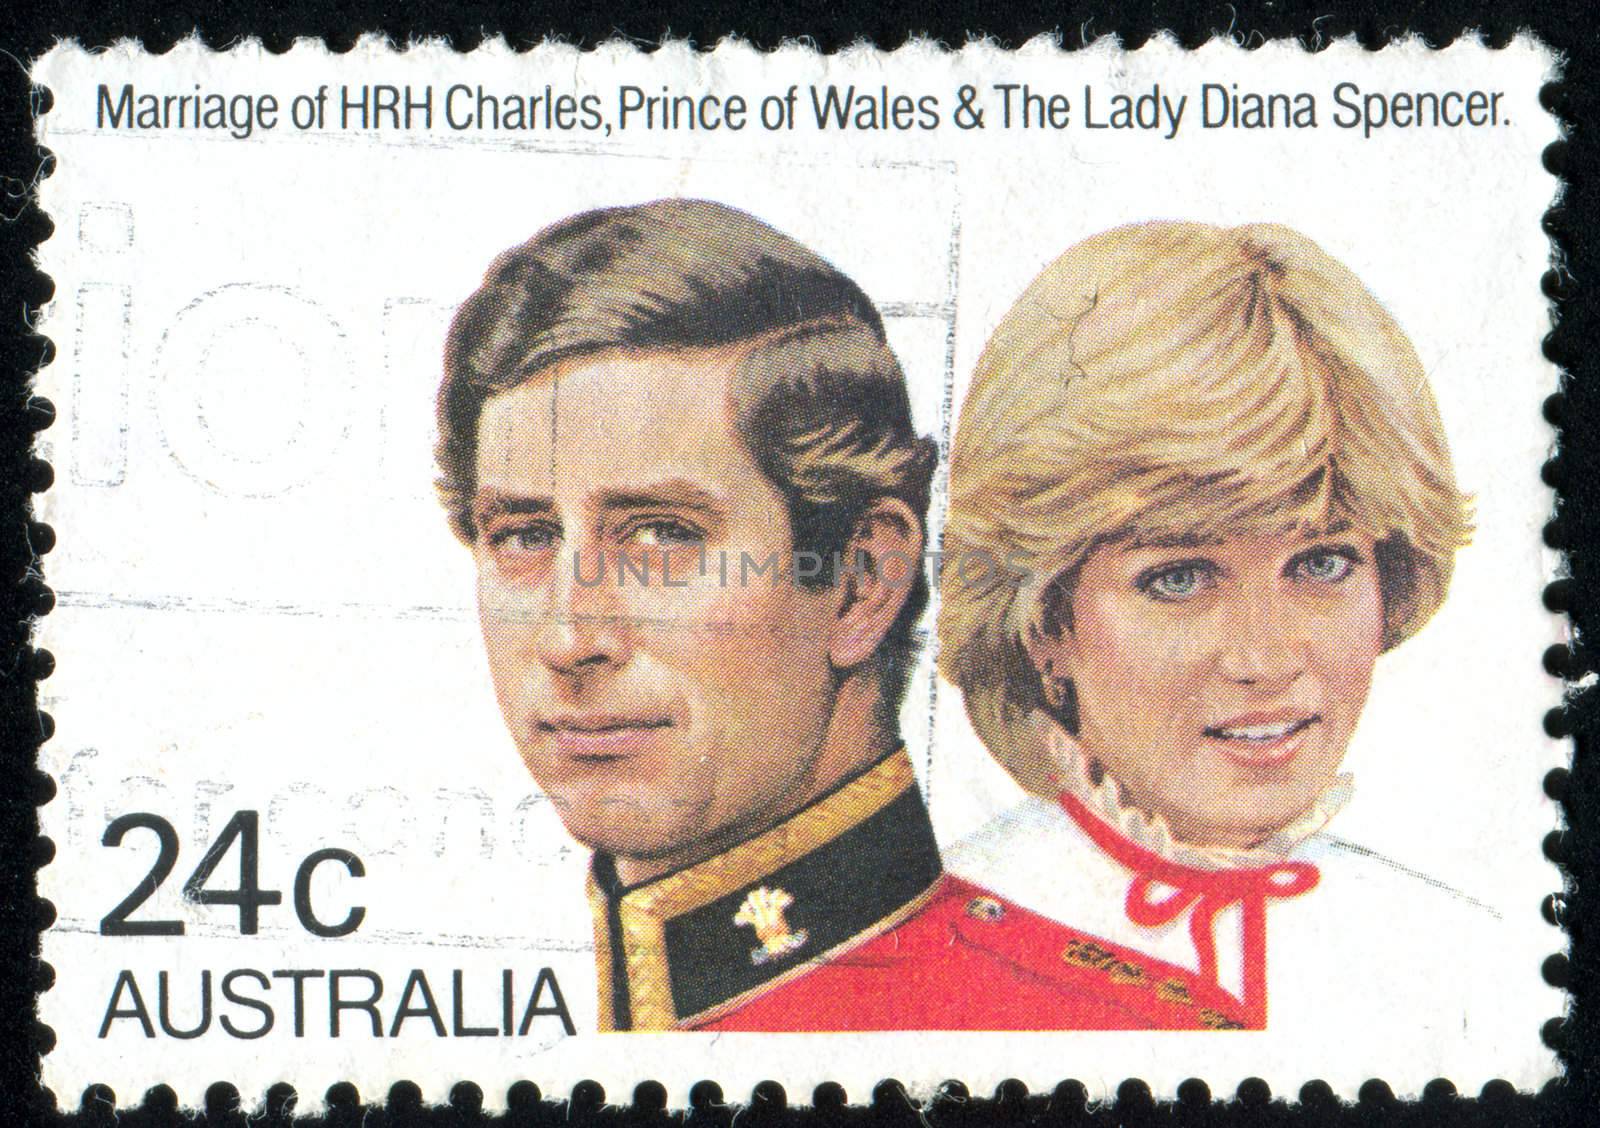 AUSTRALIA - CIRCA 1981: stamp printed by Australia, shows Prince Charles and Lady Diana, circa 1981